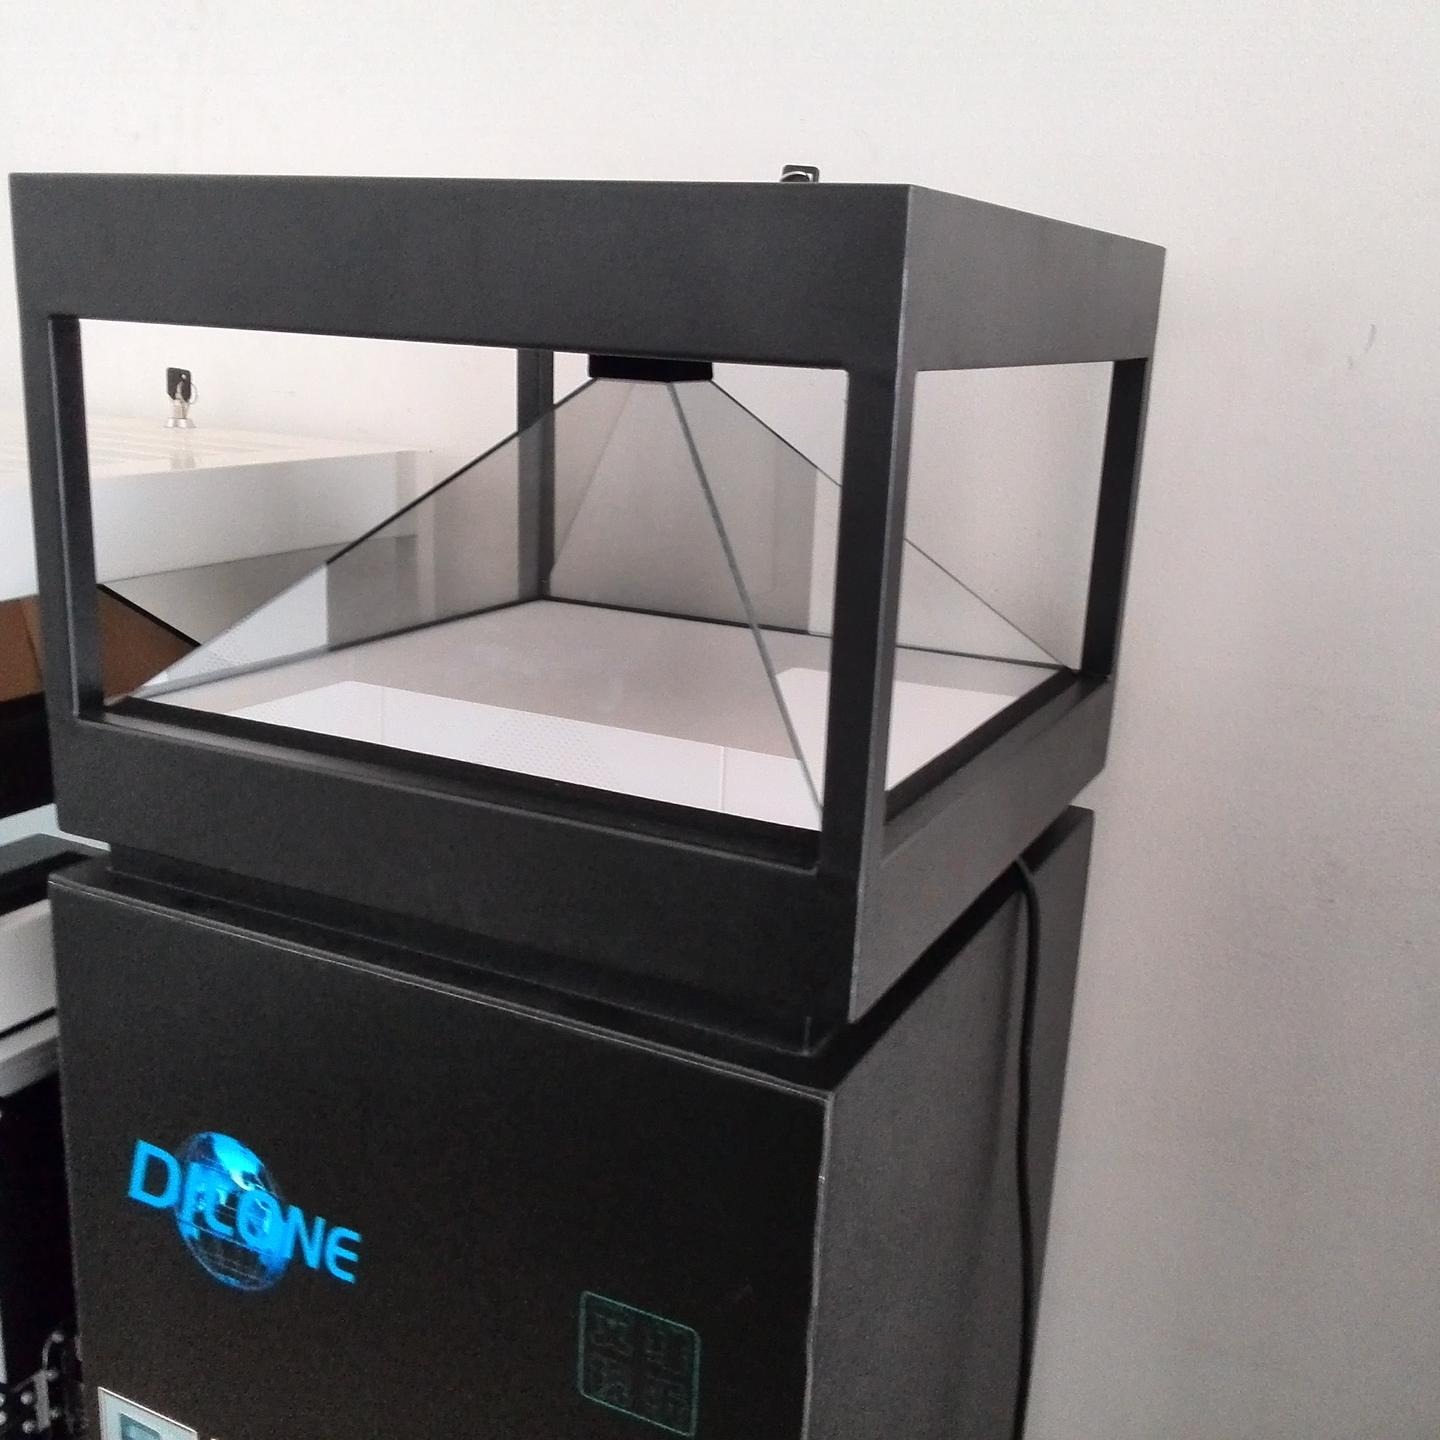 DILONE全息投影设备 珠宝展示柜 360全息展示 3D全息展示柜 投影设备 全息设备 祼眼3D 立体成像 立体投影图片